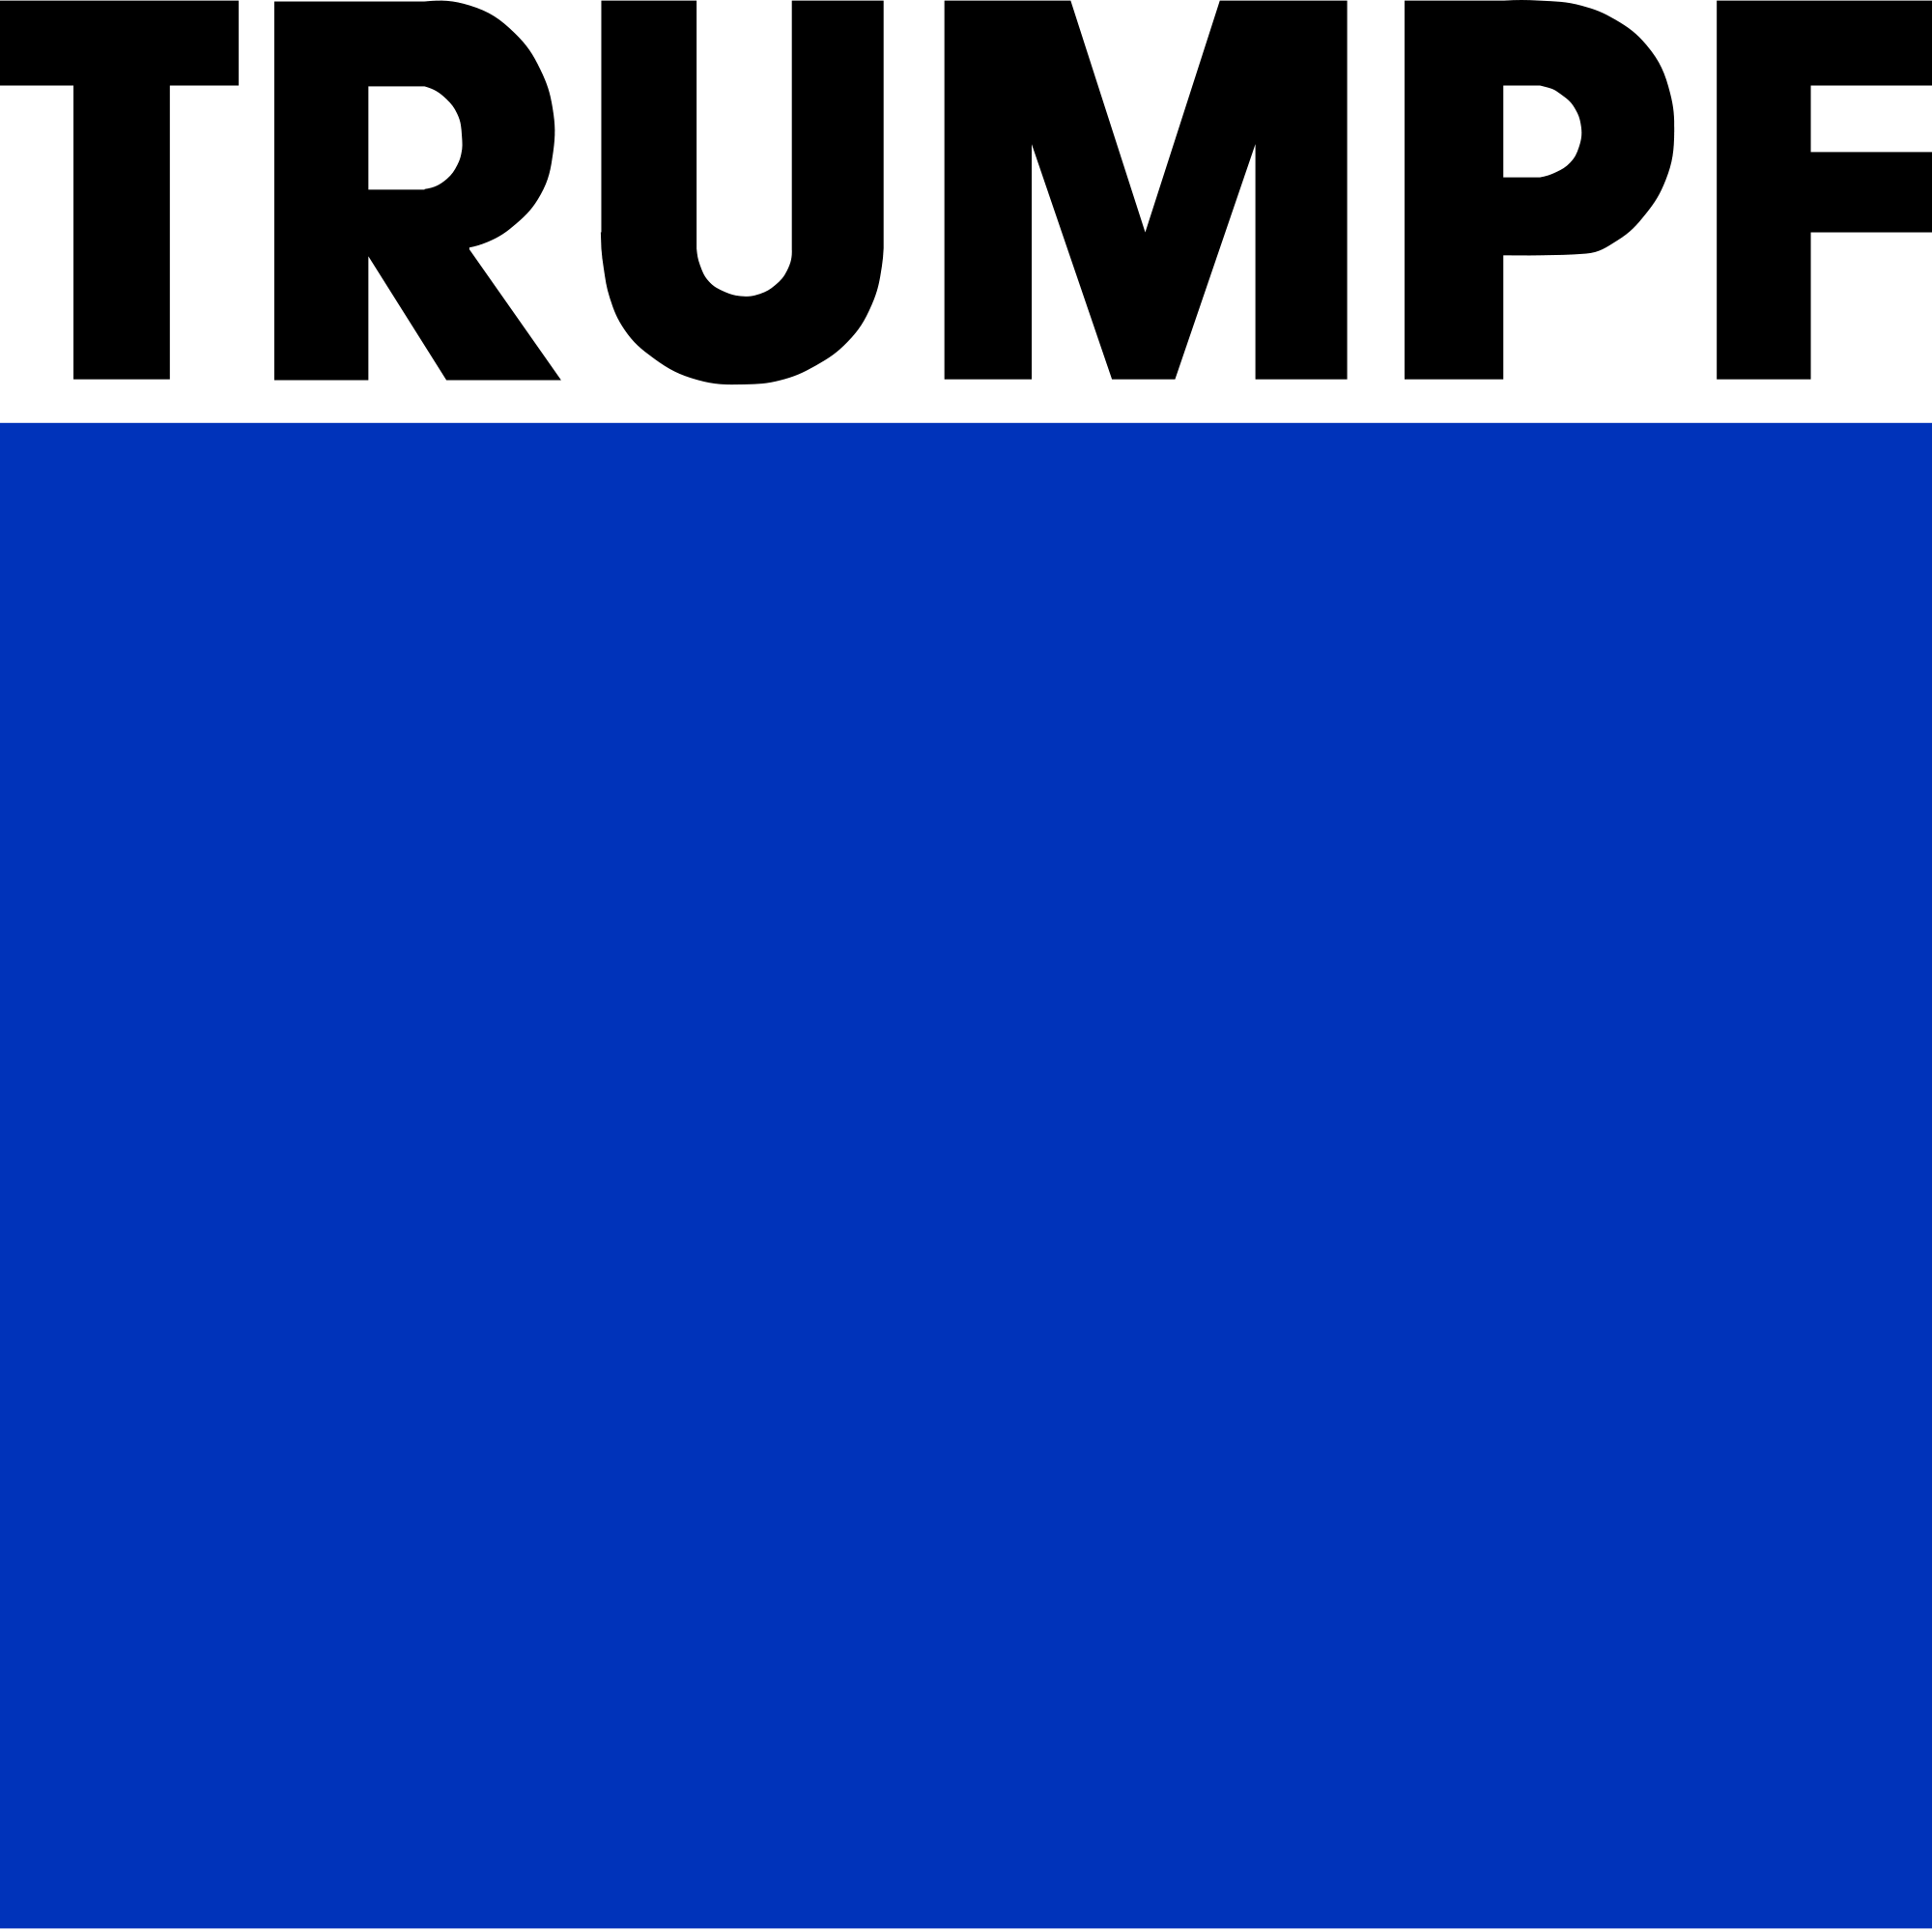 Trumpf (Company Image) 